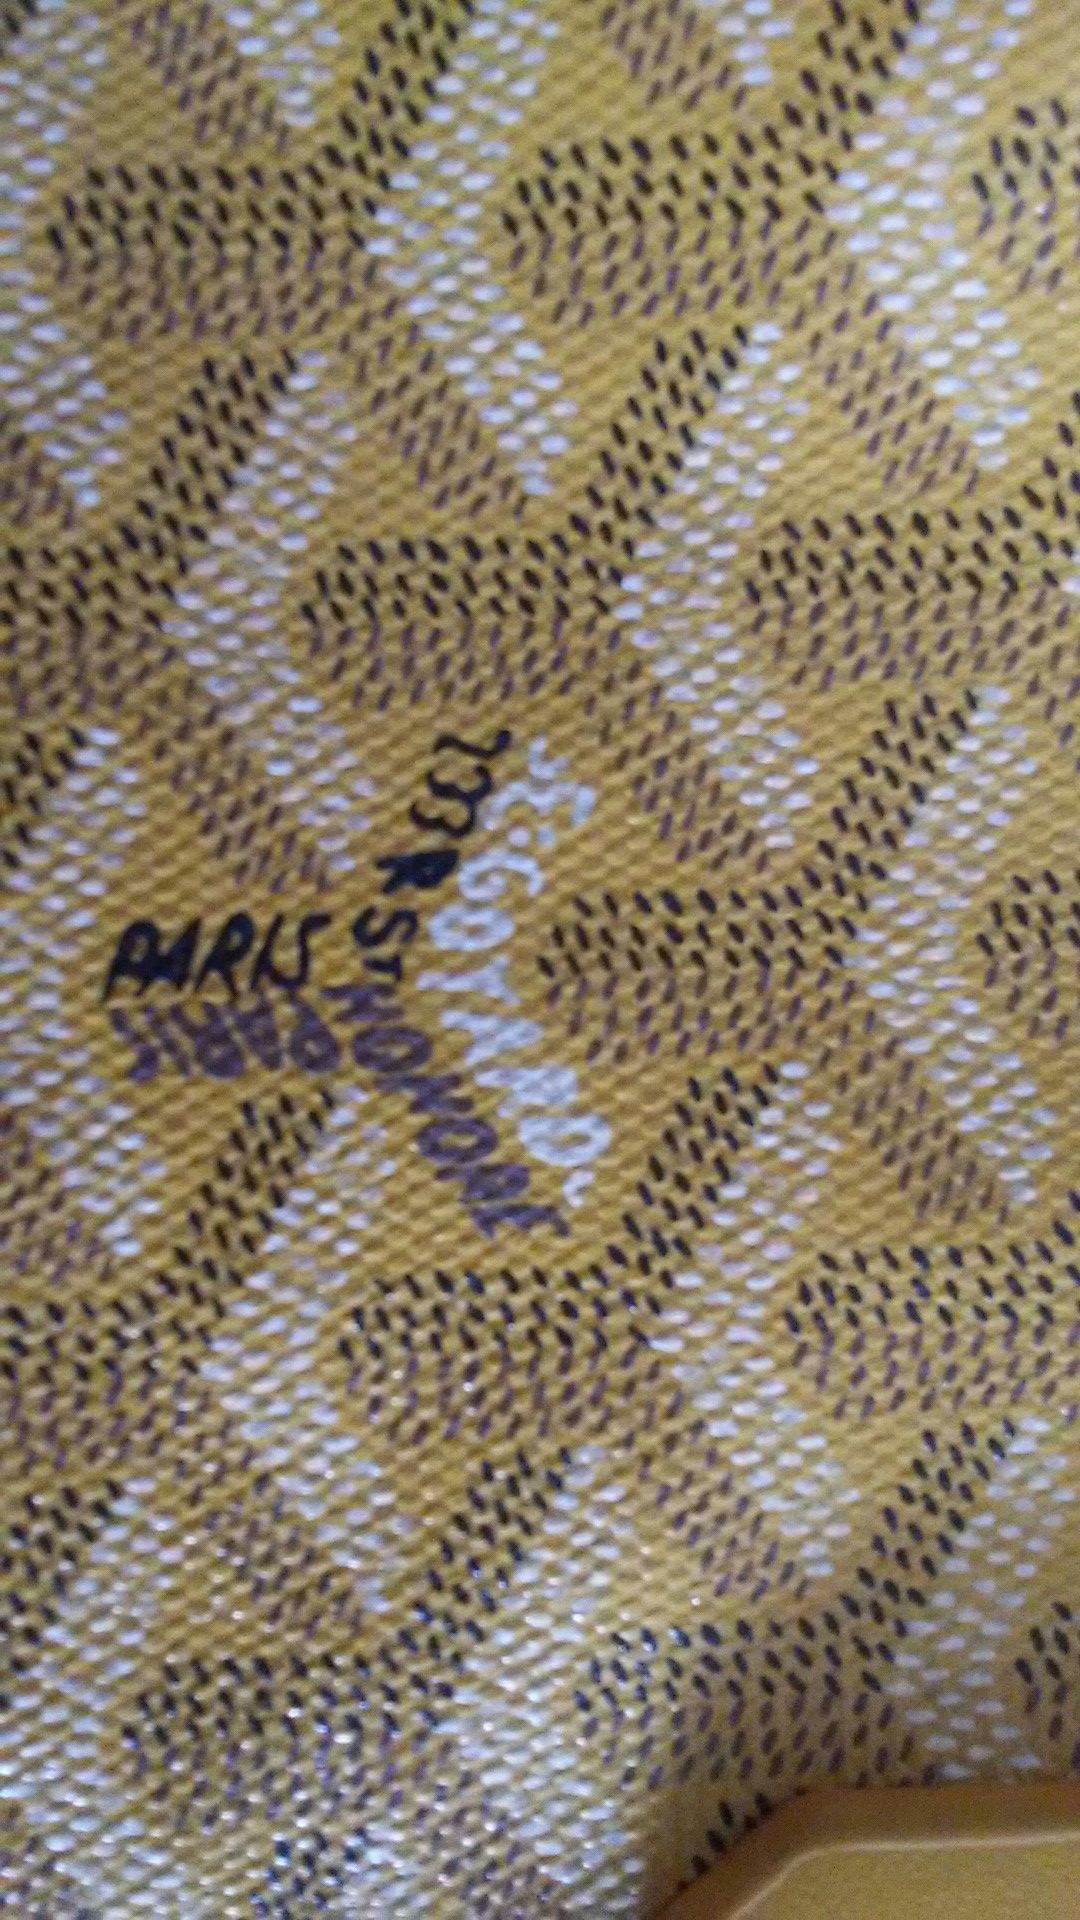 Goyard yellow Saint Louis GM tote – My Girlfriend's Wardrobe LLC